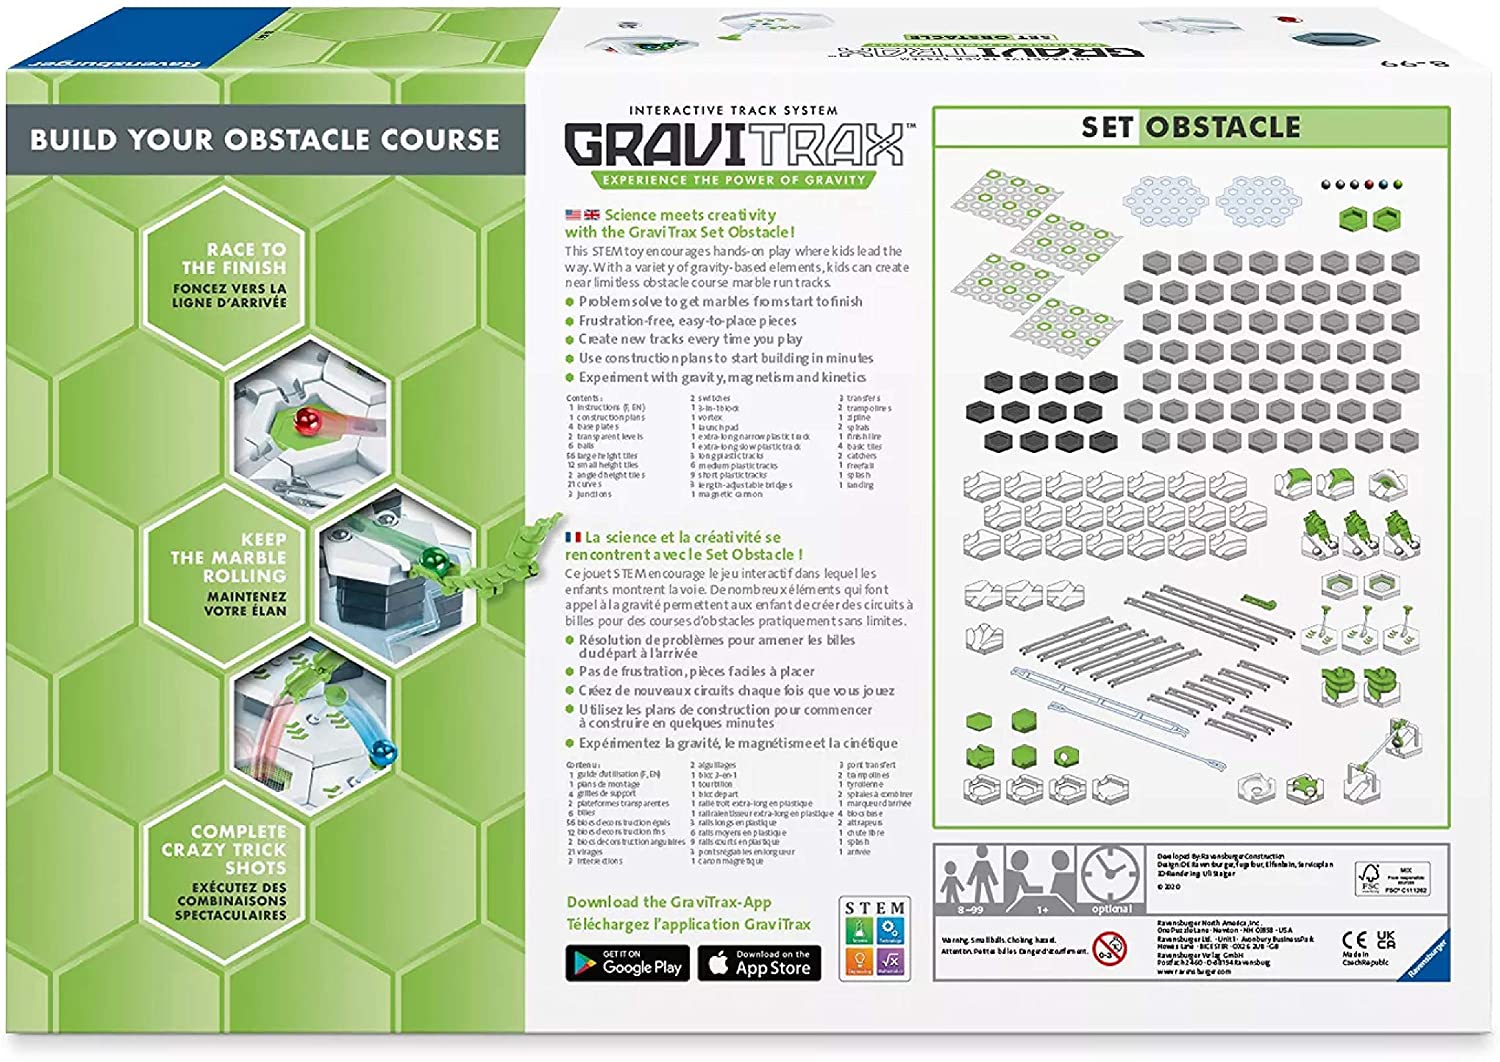 Gravitrax - Obstacle Starter Set – Foothill Mercantile